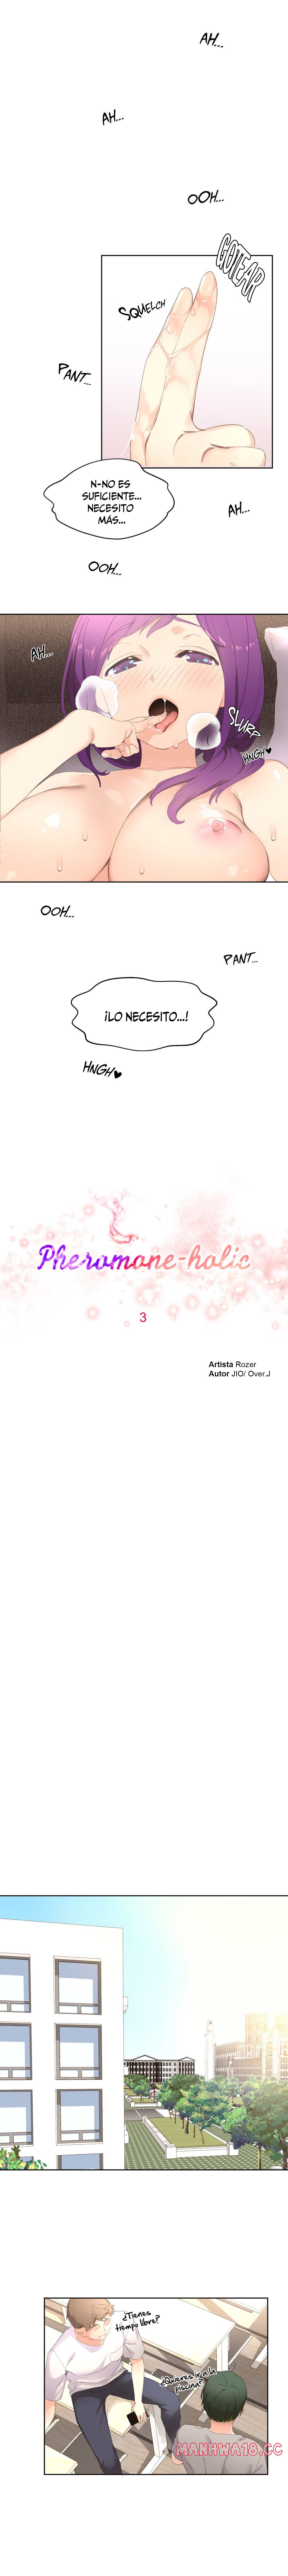 Pheromone Holic Raw - Chapter 3 Page 3